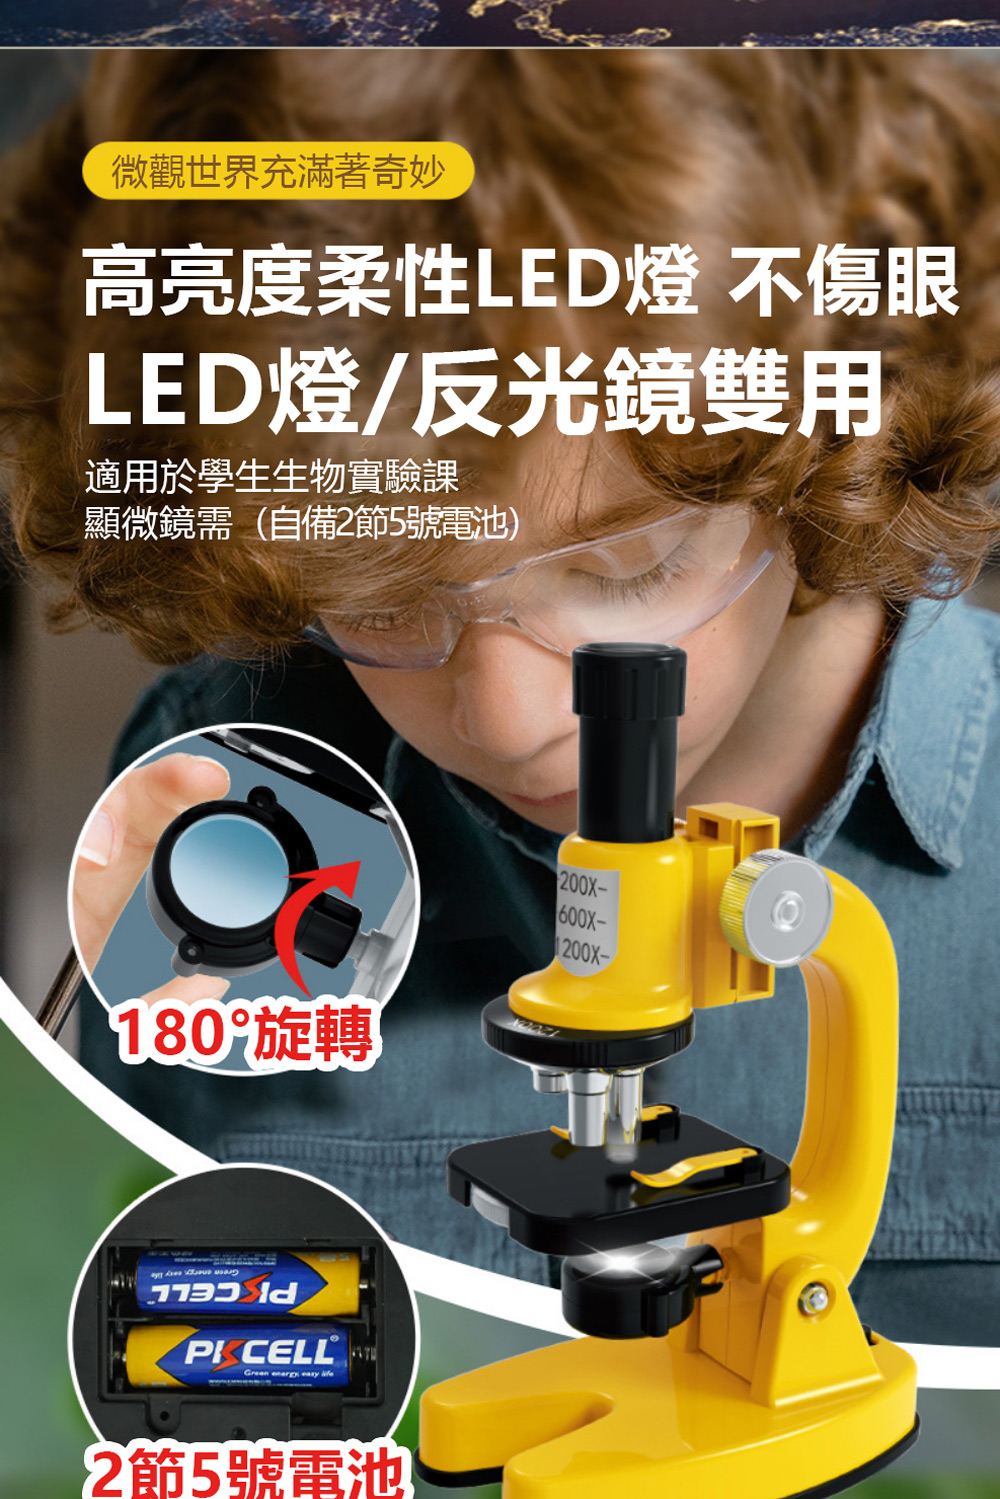 IDREES 伊德萊斯 1200倍光學顯微鏡 LED補光燈手